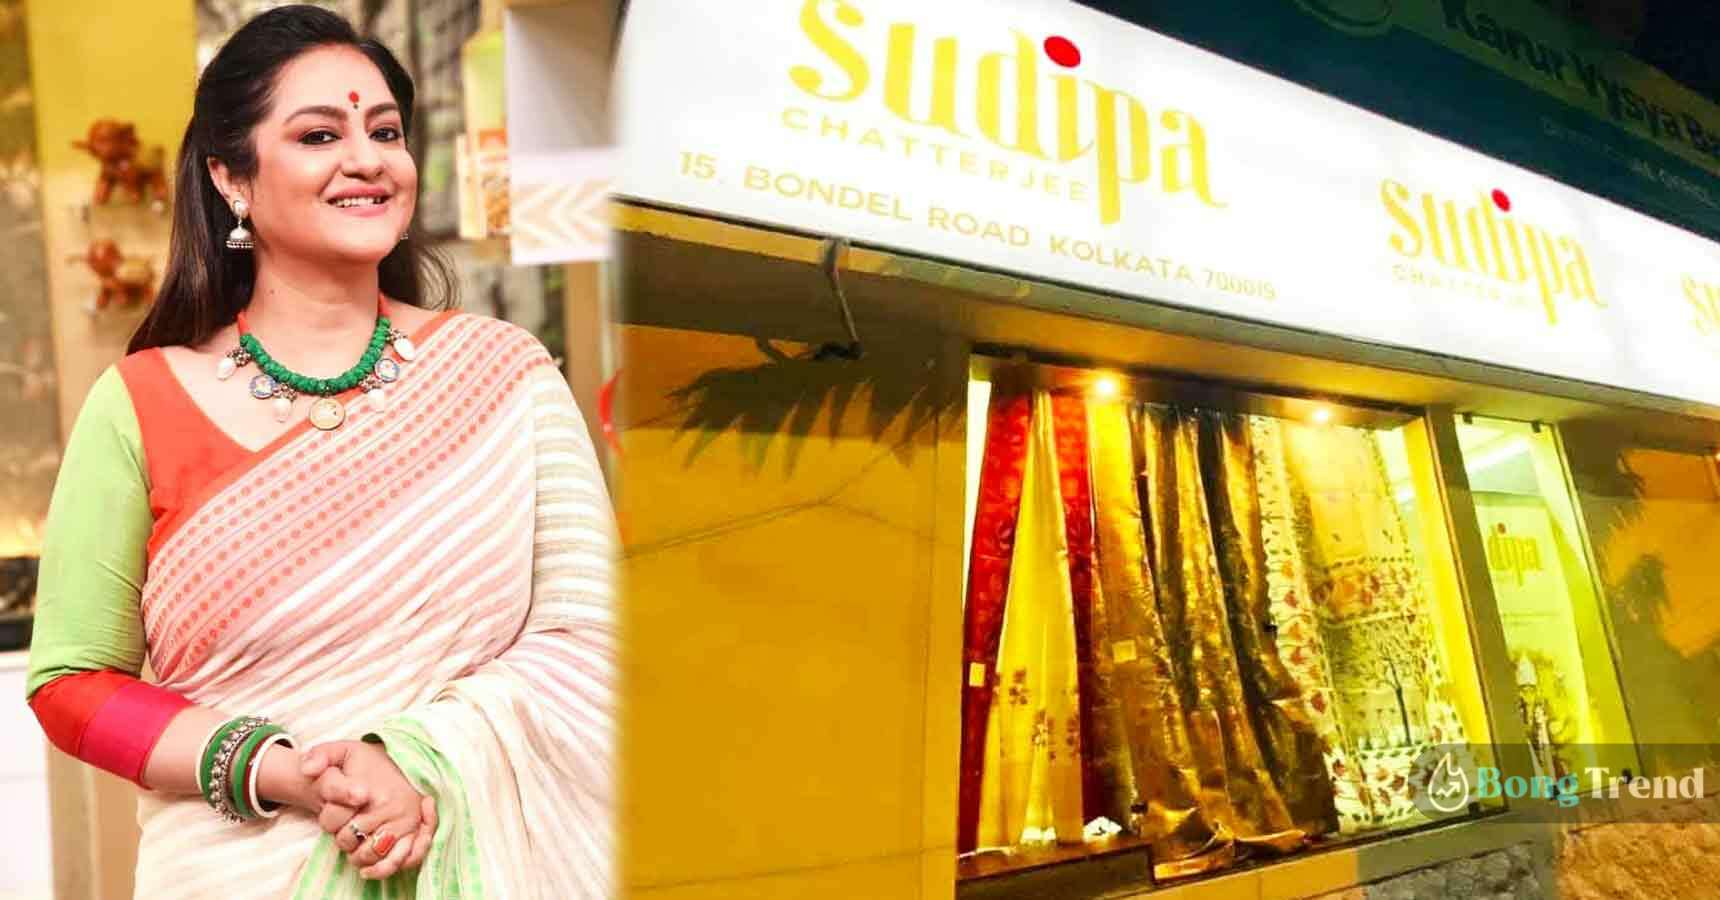 Sudipa Chatterjee Store opend now সুদীপা চ্যাটার্জী স্টোর,Rannaghar,Zee Bangla Rannaghar